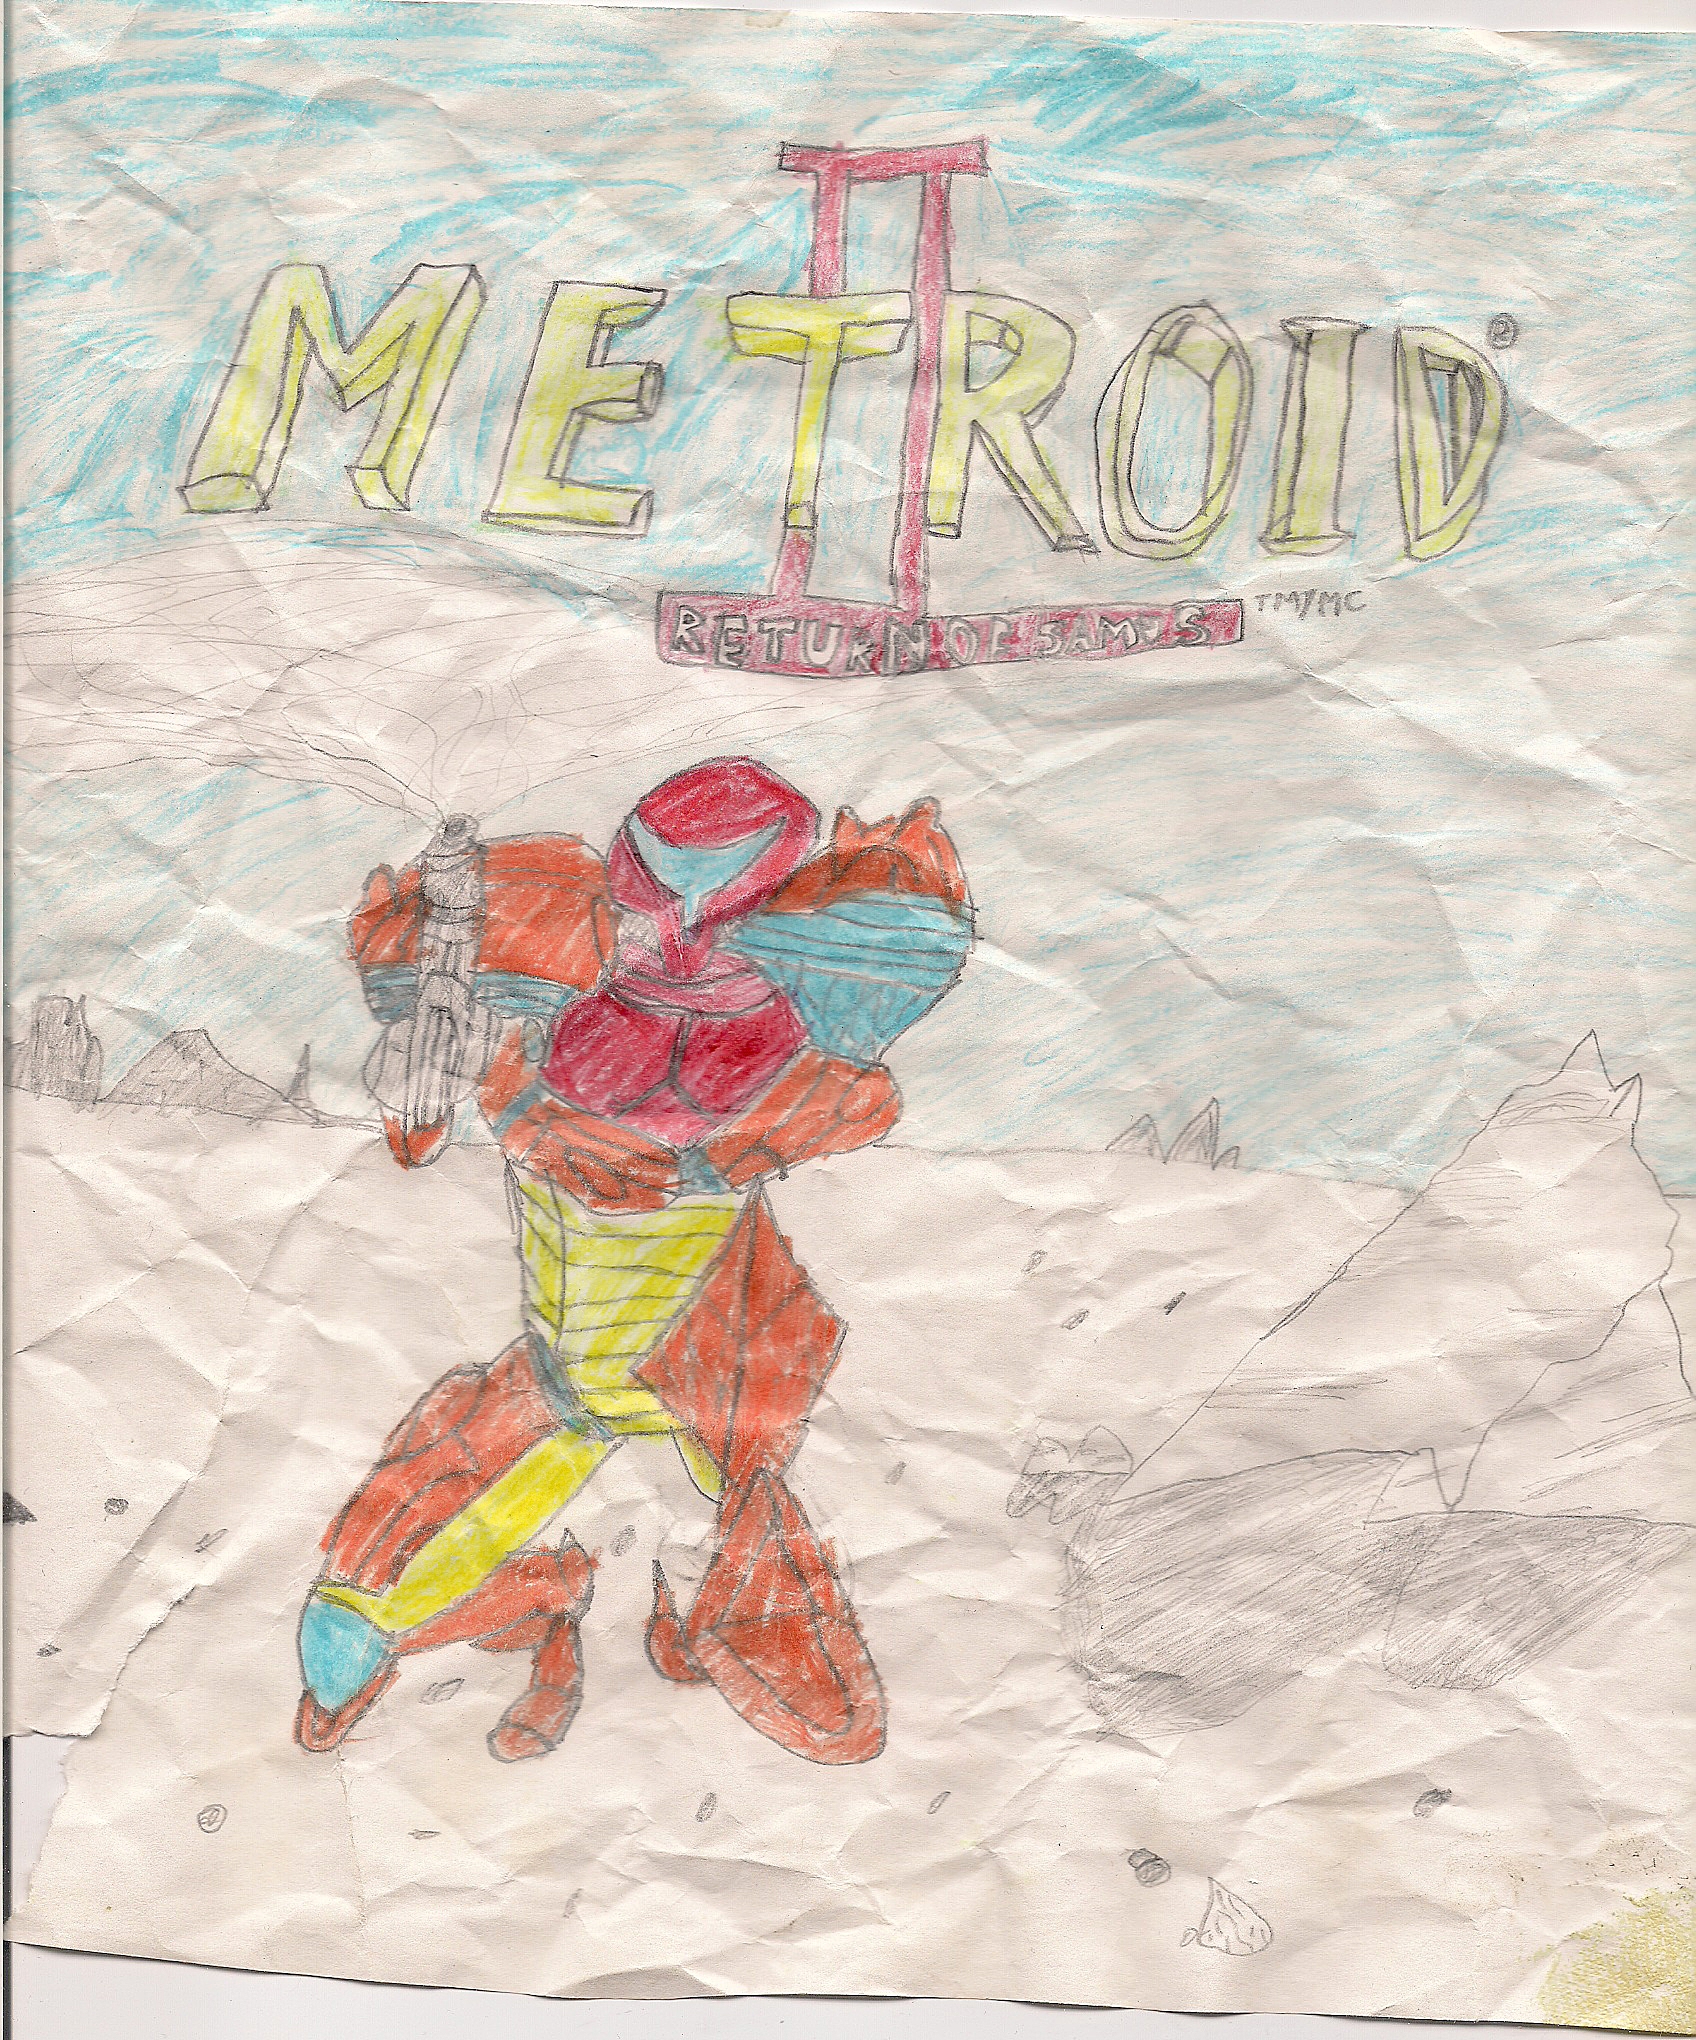 Metroid II - Return of Samus (age 6) by Danny Poloskei